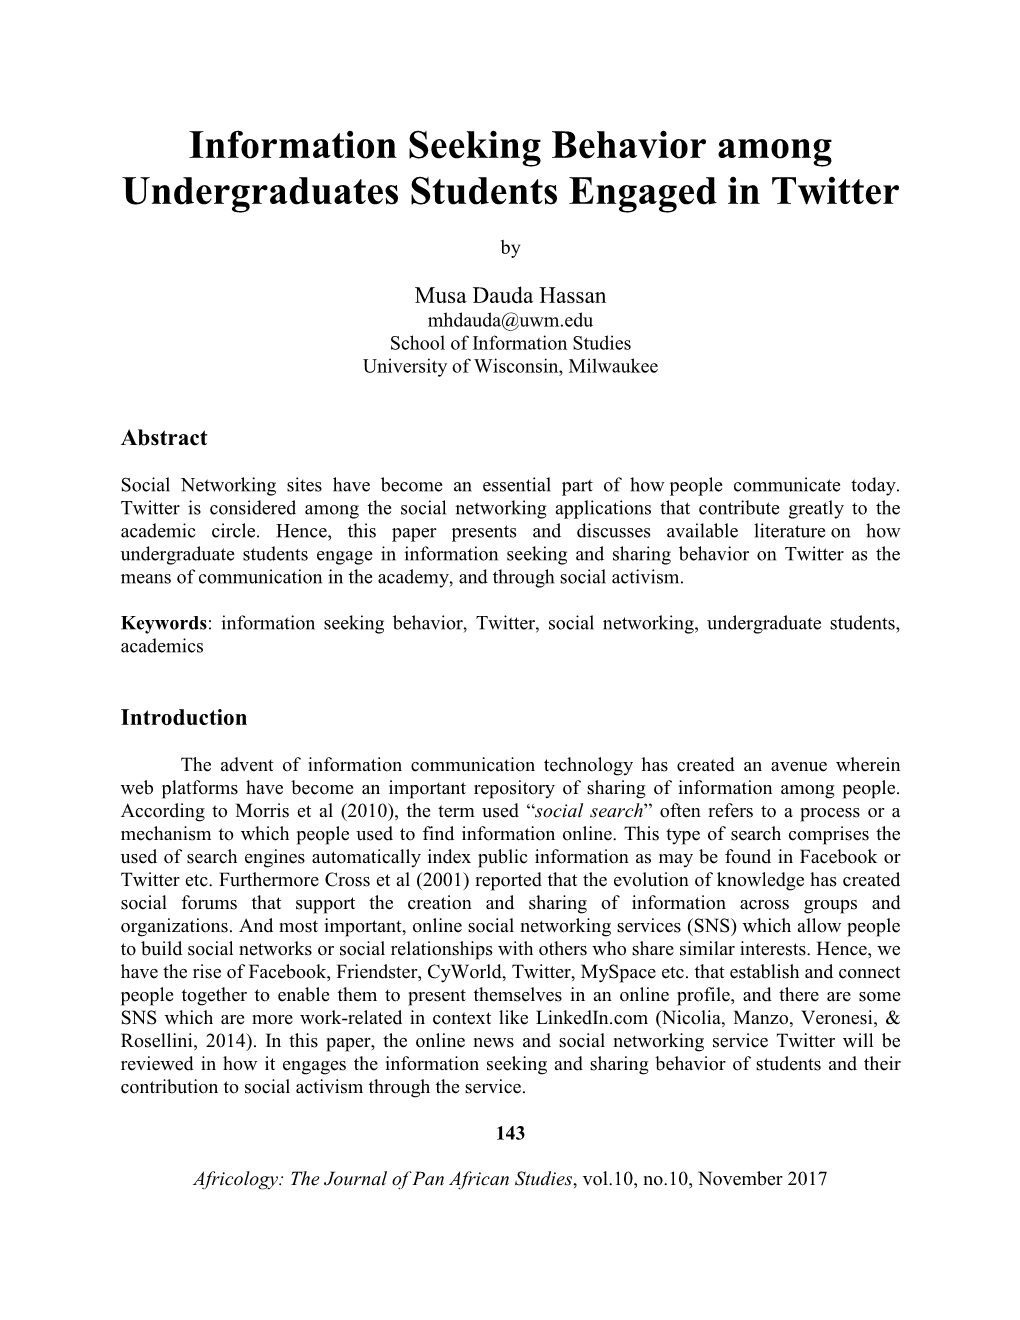 Information Seeking Behavior Among Undergraduates Students Engaged in Twitter